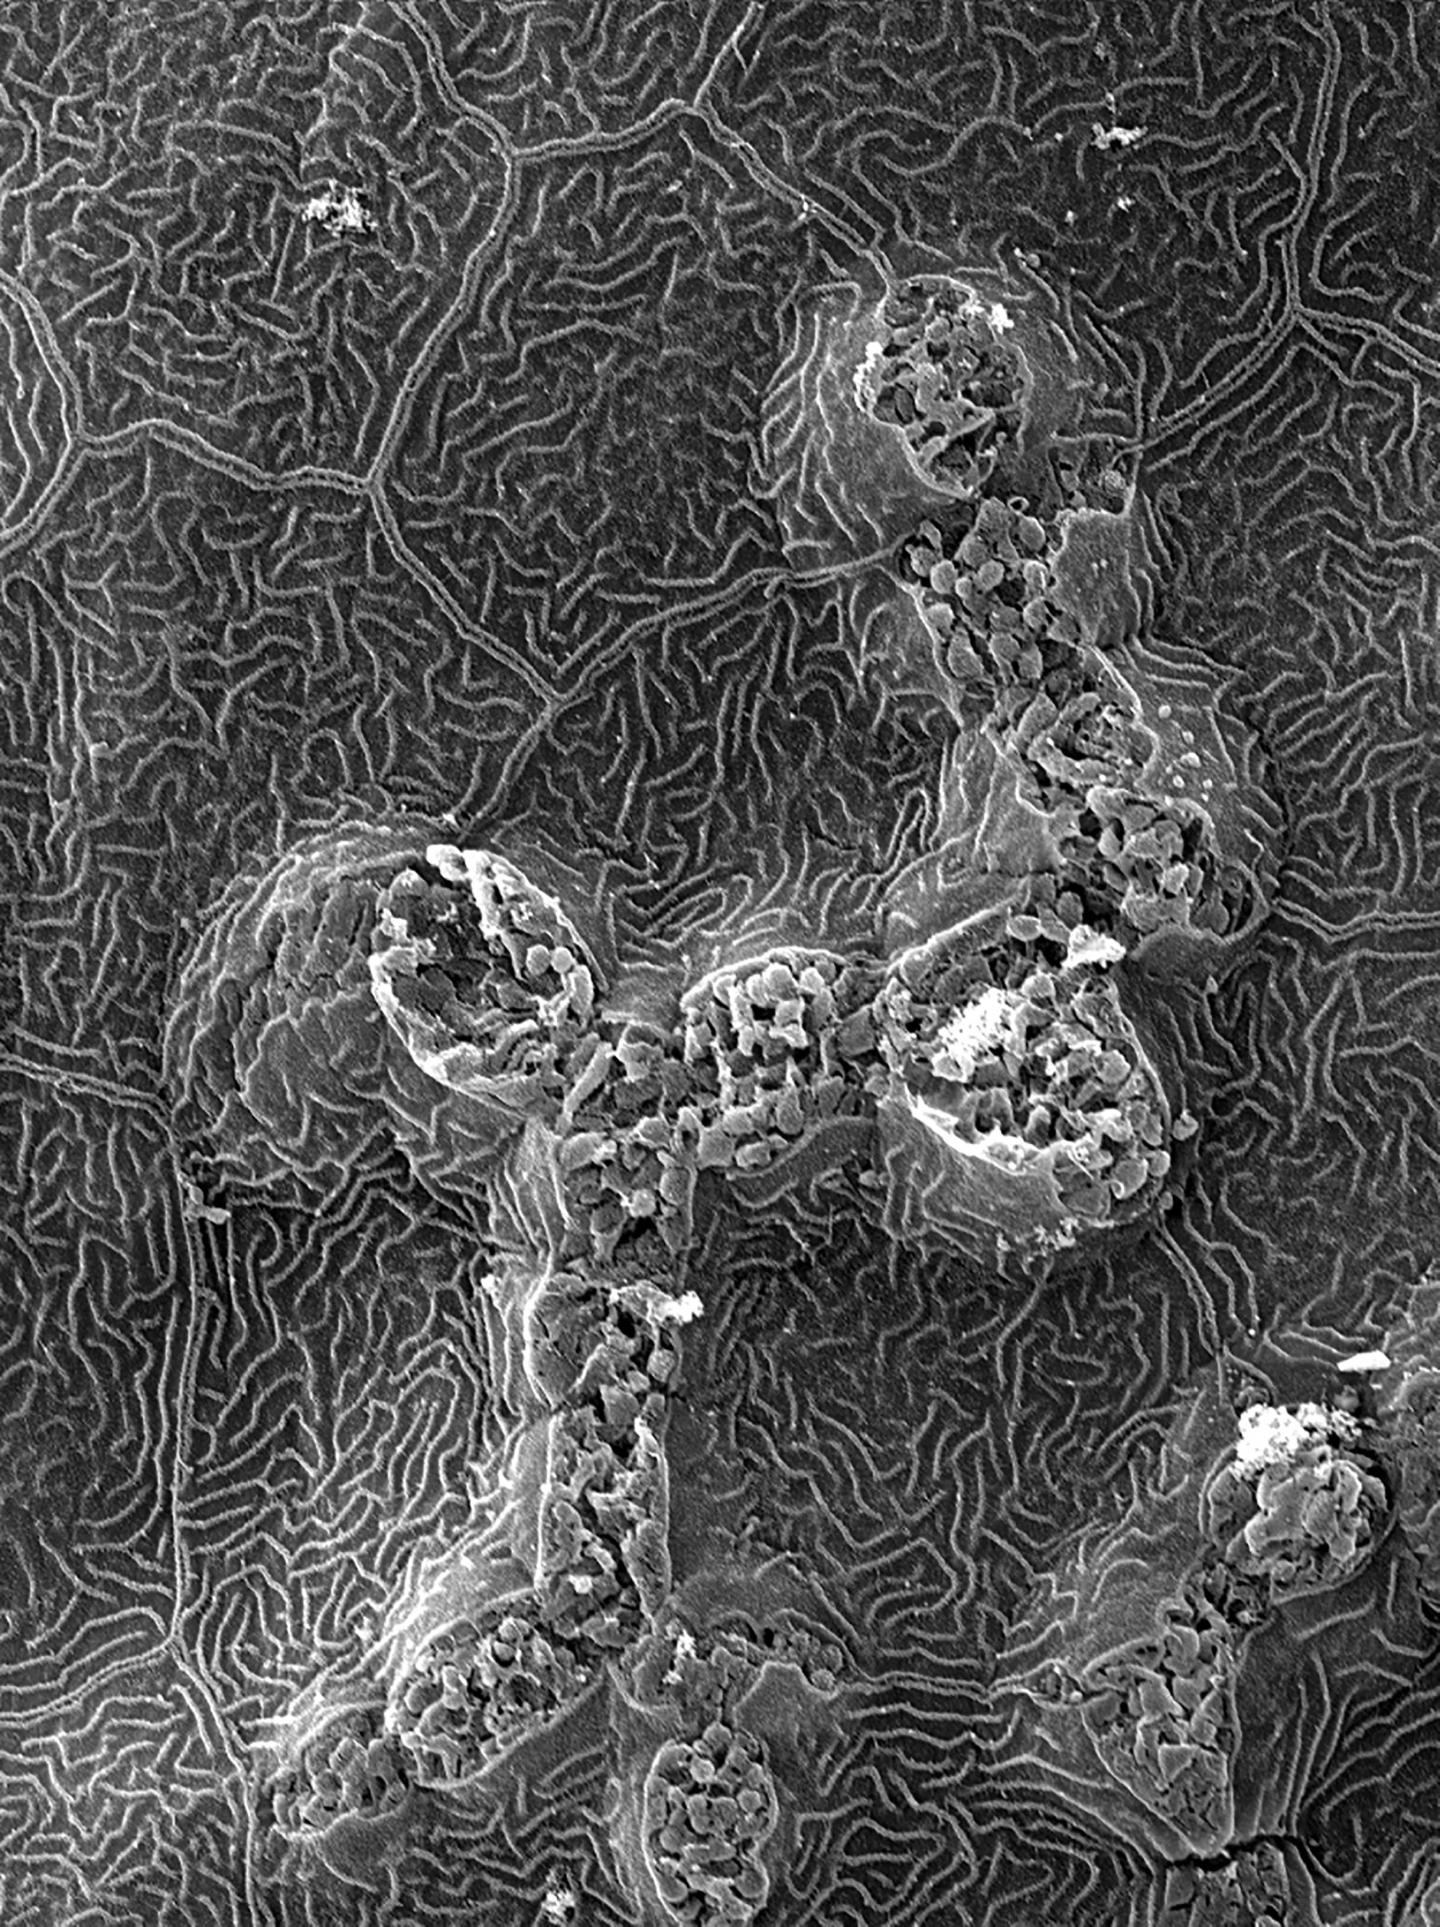 Micrograph of a Region of Zebrafish Skin